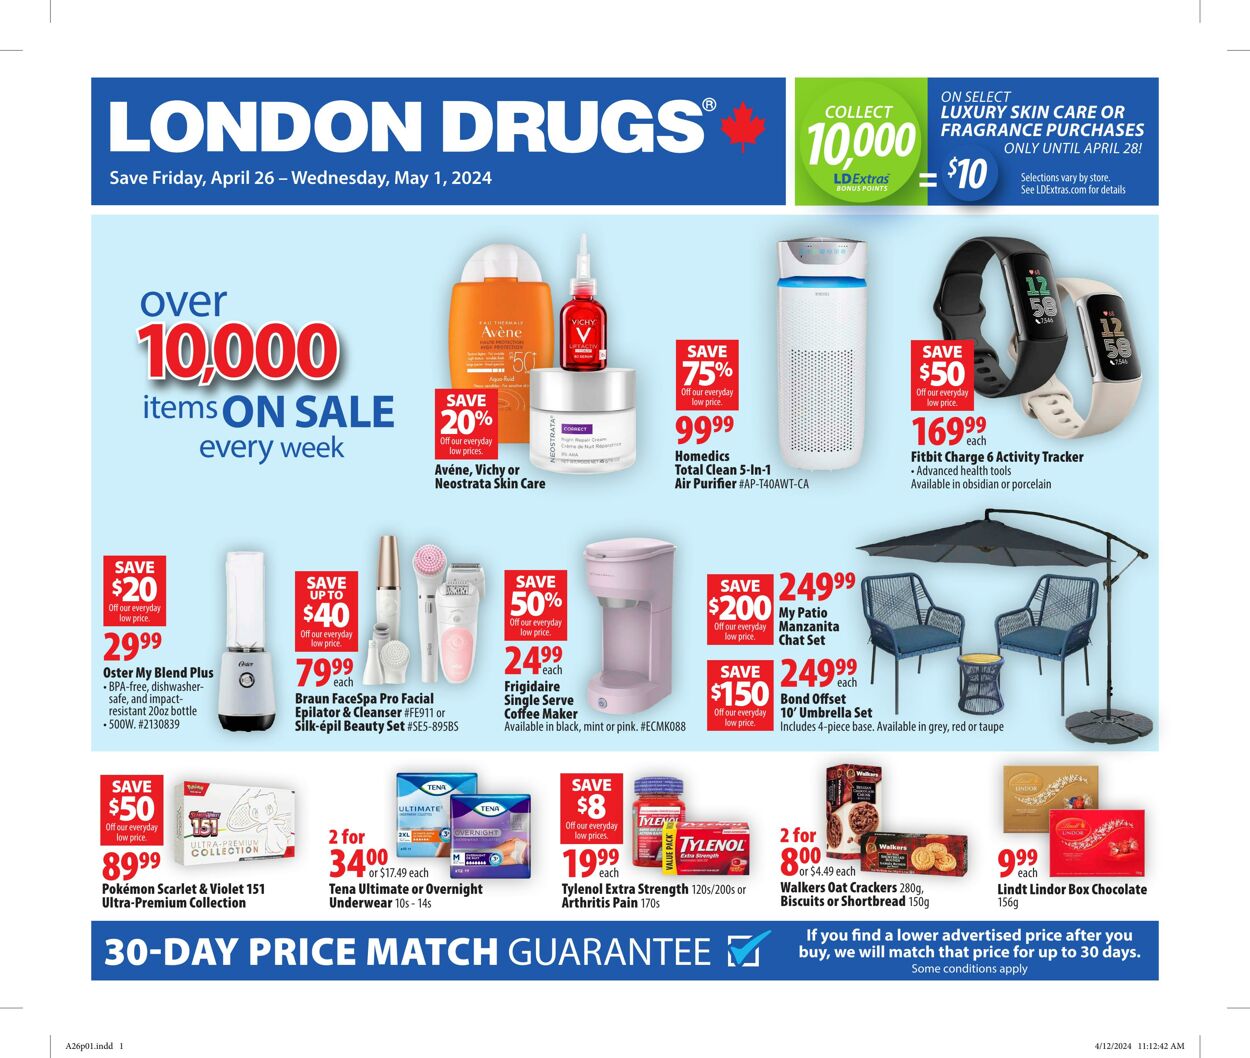 London Drugs Promotional flyers